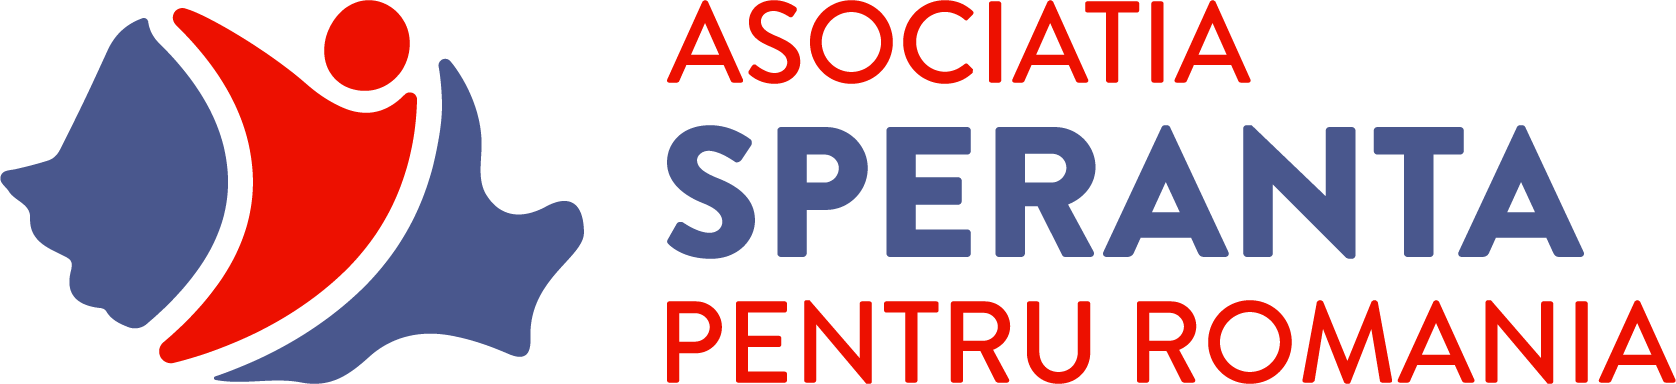 ASOCIATIA SPRO SPERANTA PENTRU ROMANIA logo